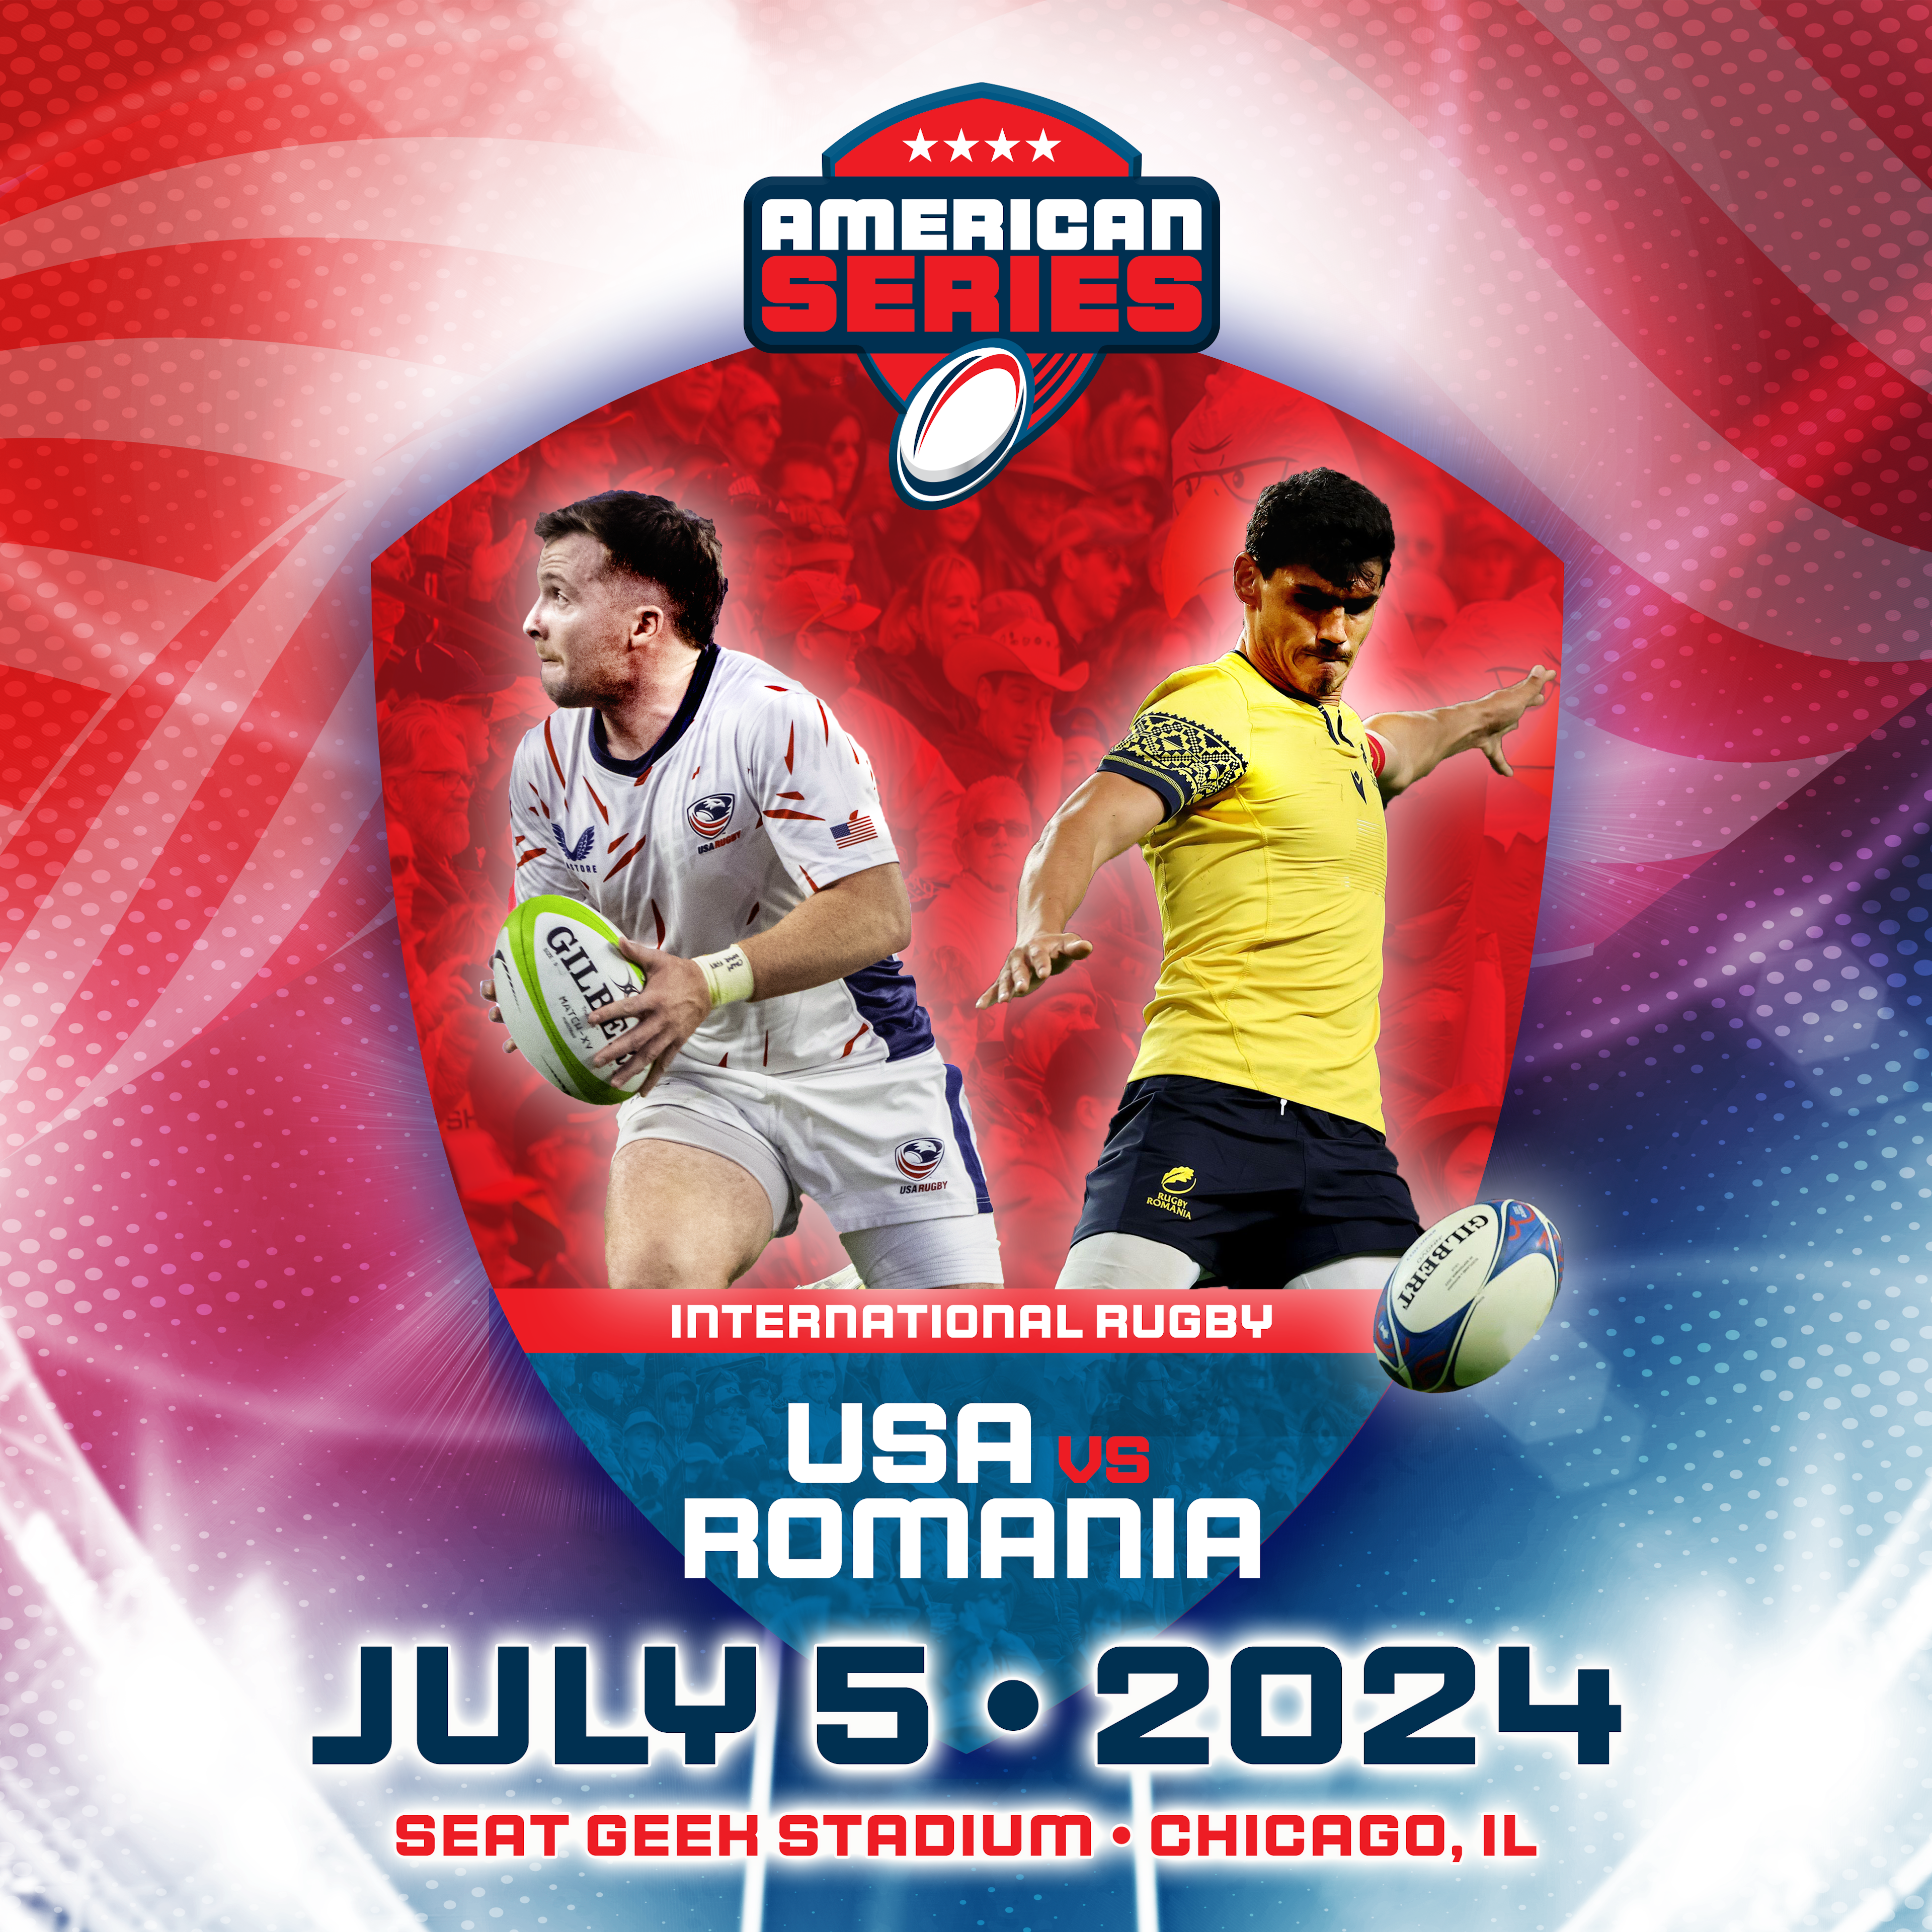 USA vs Romania Event Card 2